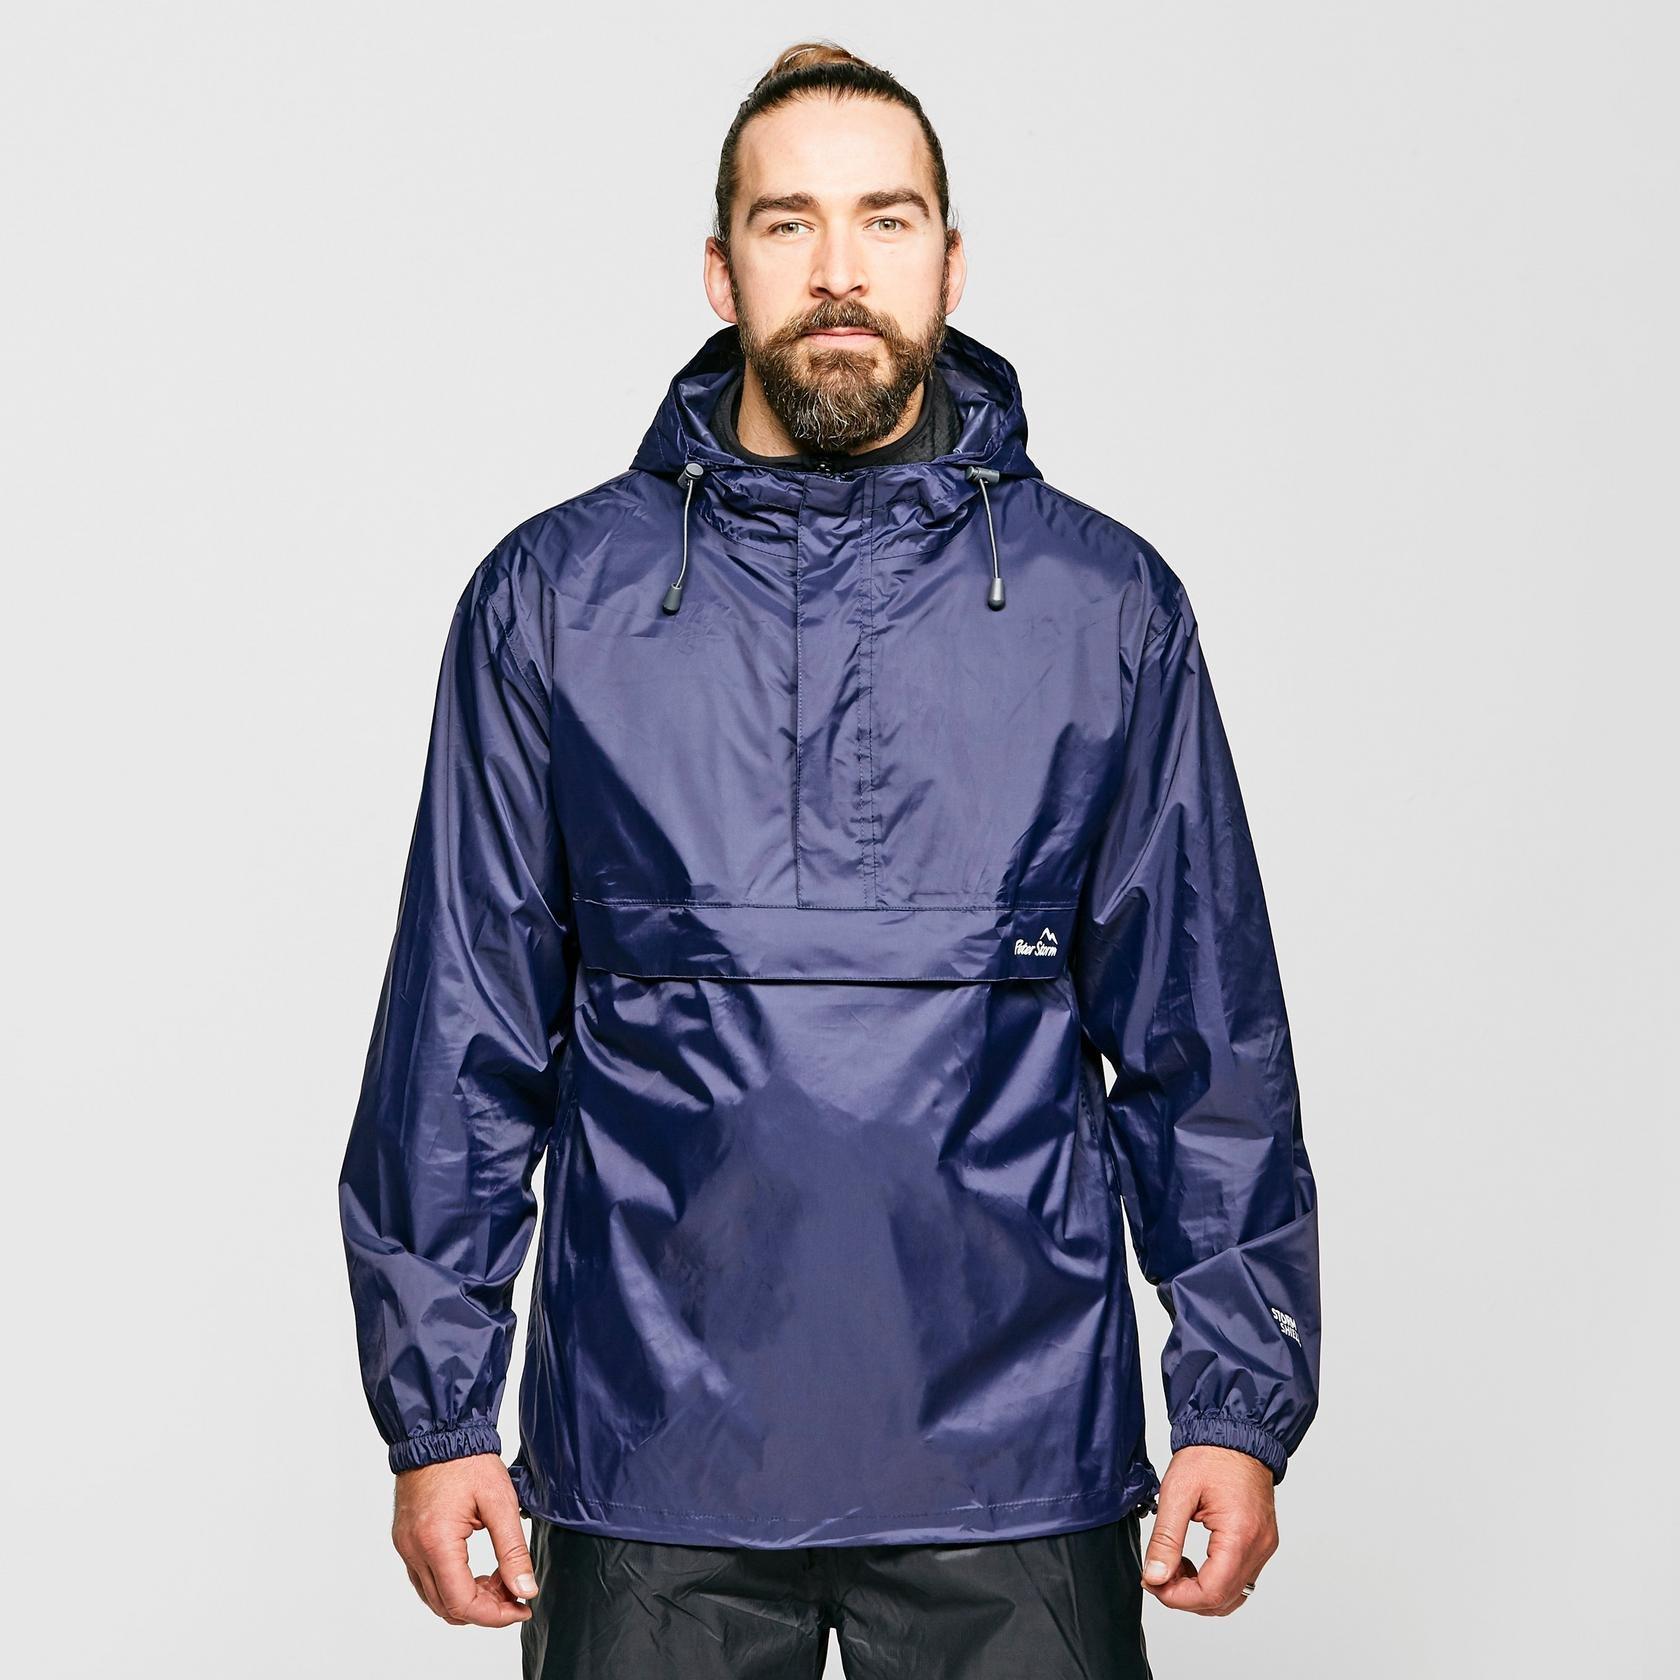 Peter Storm Rain Suit  Rain wear, Rainwear girl, Hooded rain jacket